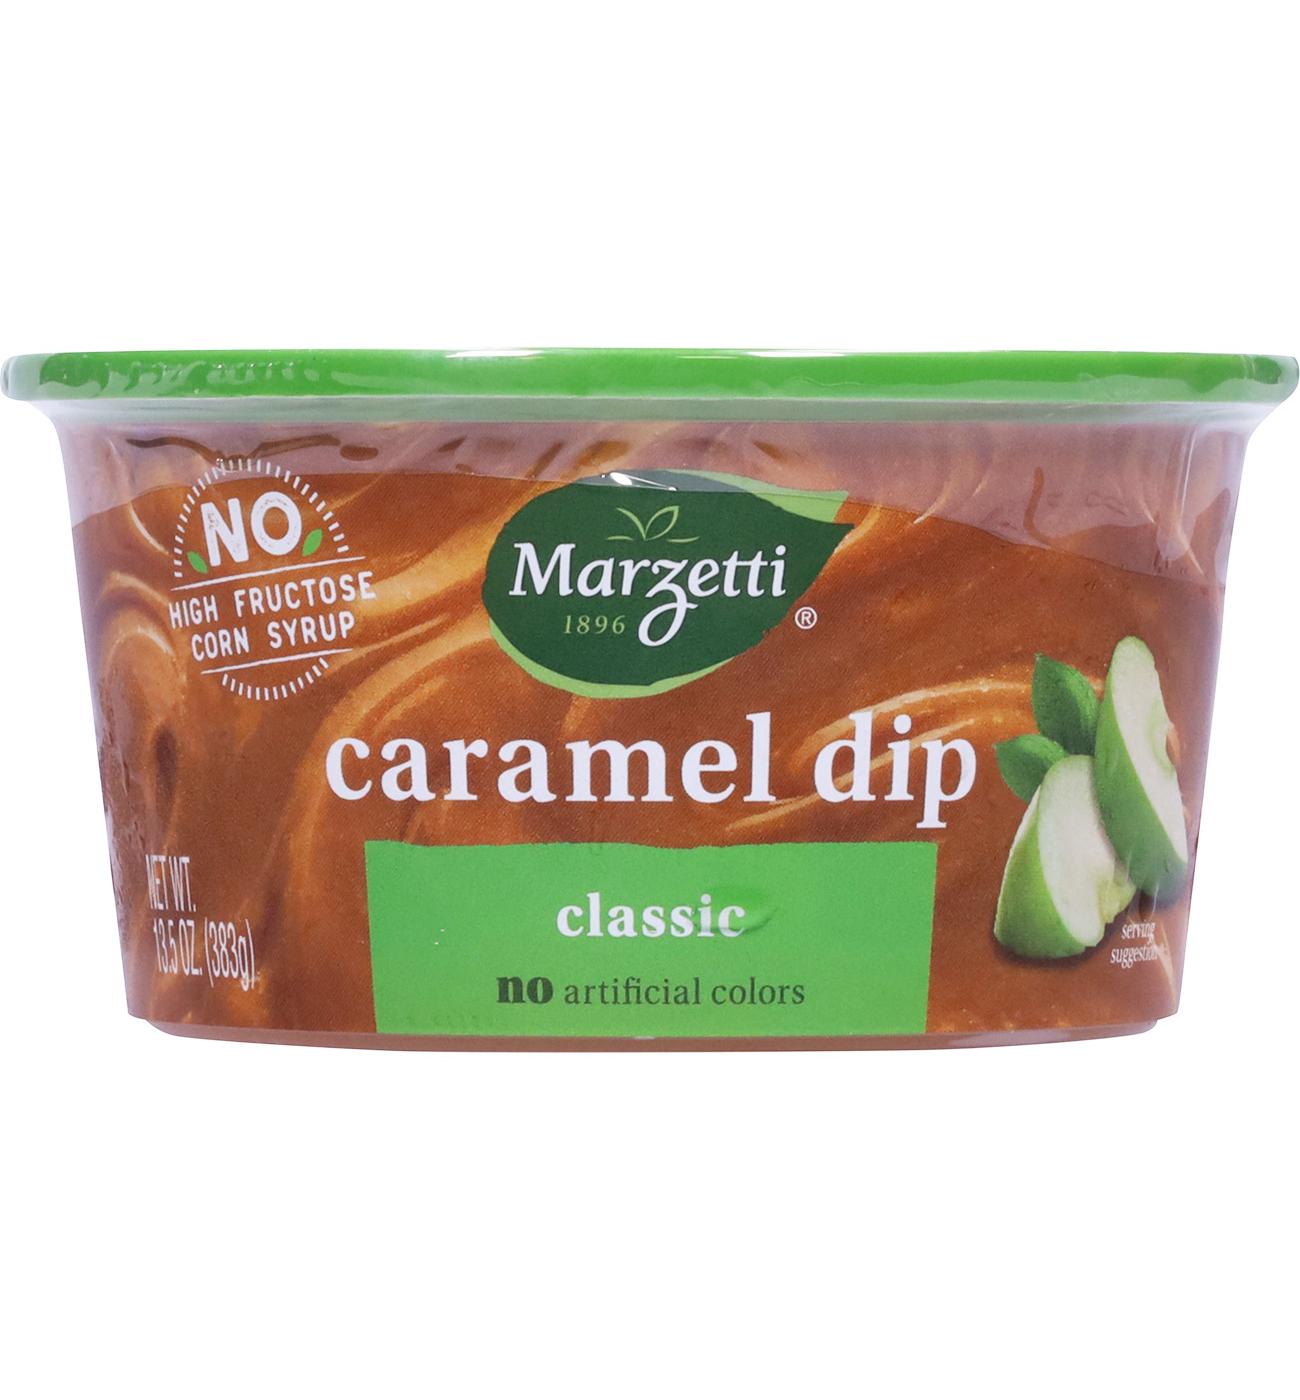 Marzetti Caramel Dip - Classic; image 1 of 4